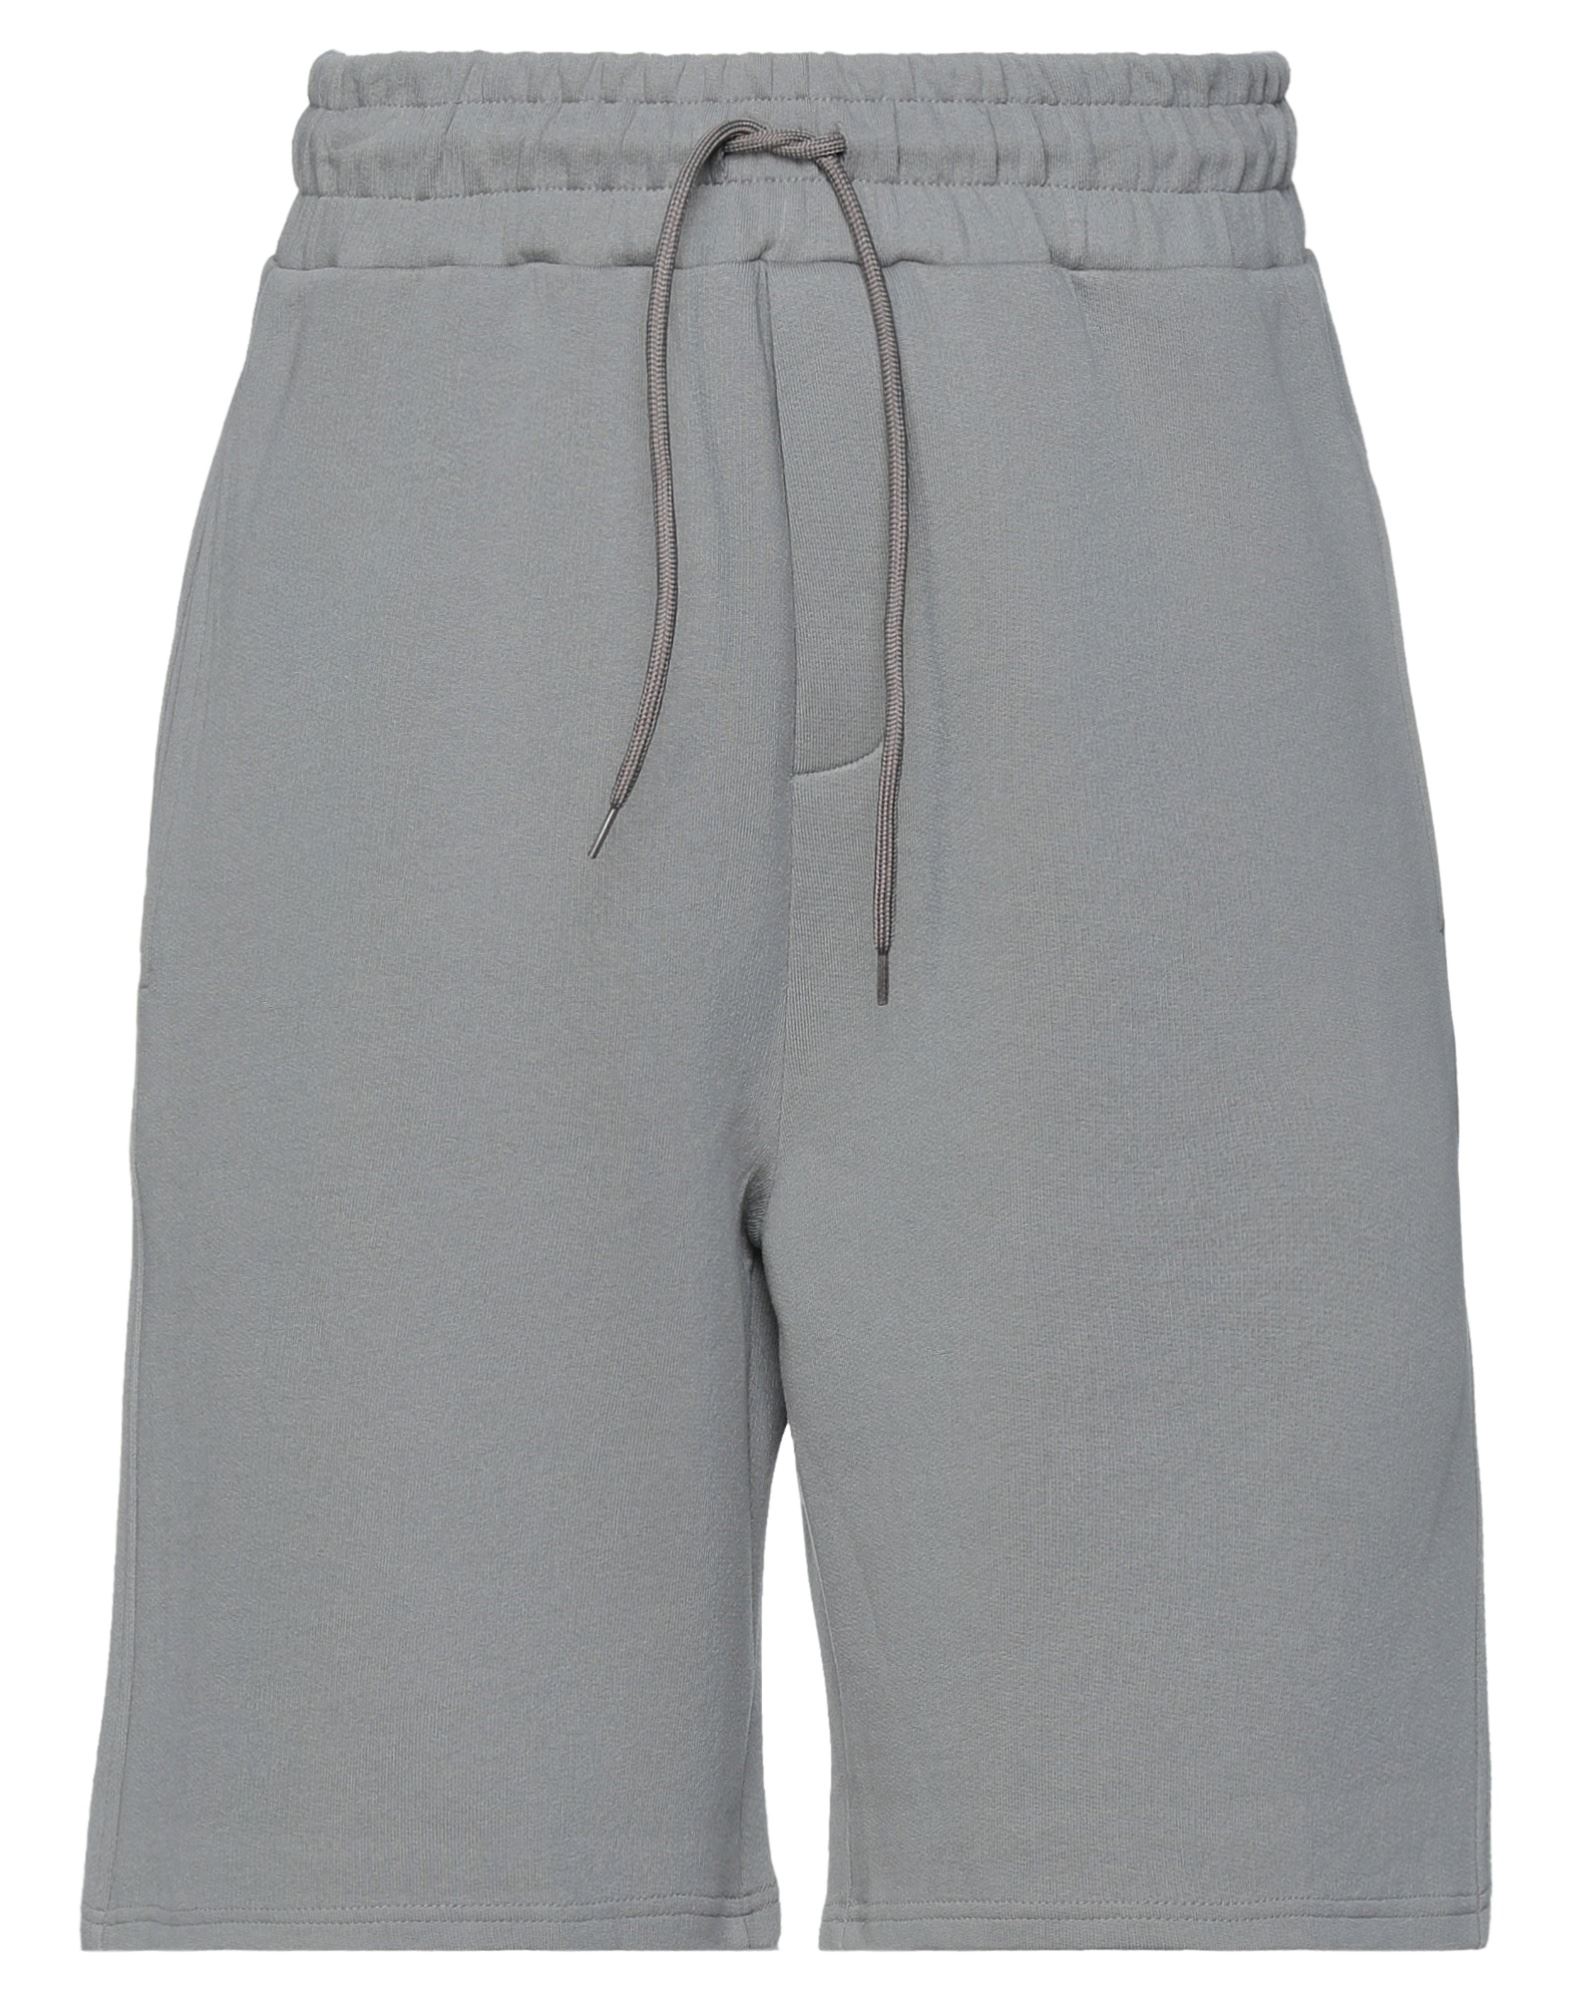 THE FUTURE Shorts & Bermuda Shorts. sweatshirt fleece, no appliqués, so...